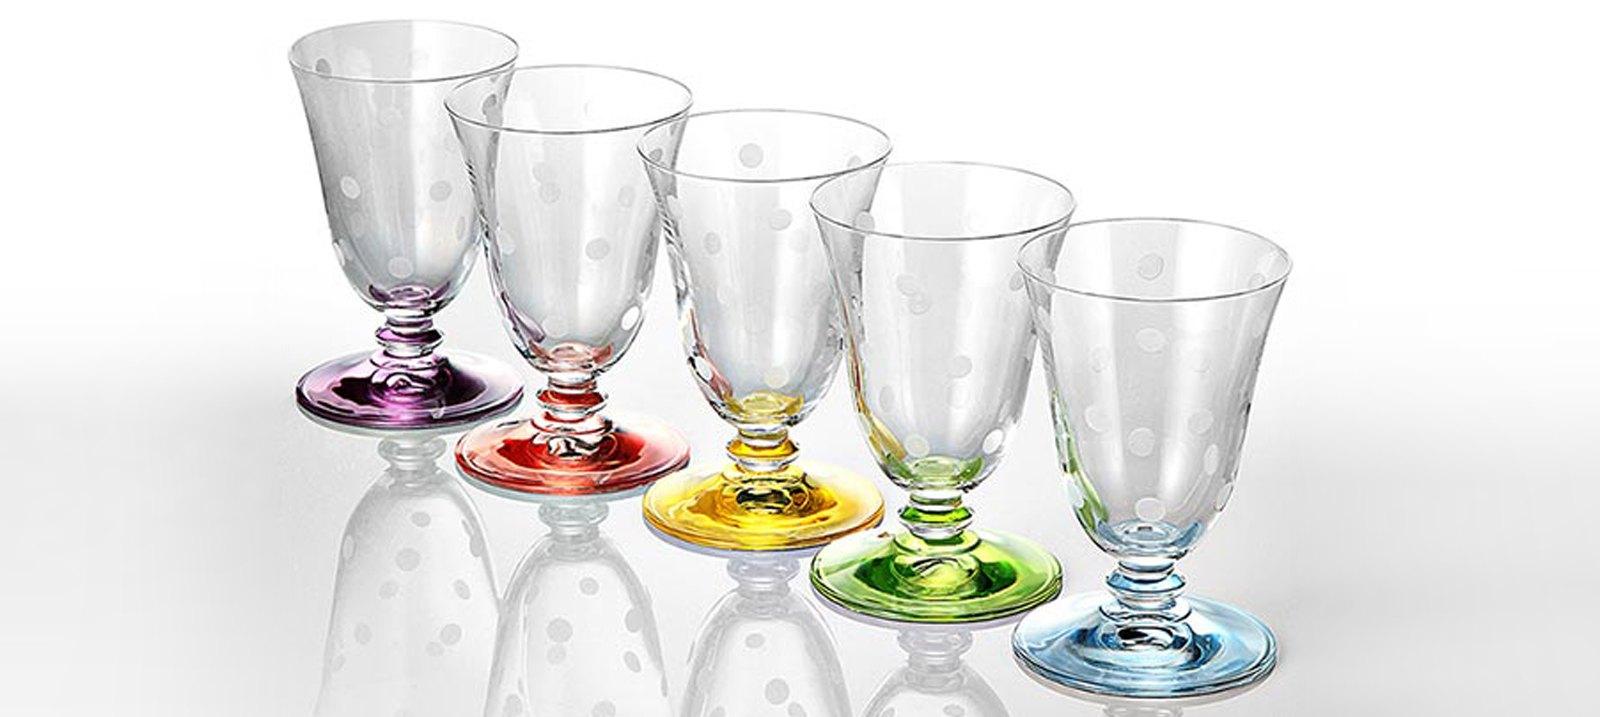 Bohemia Glass